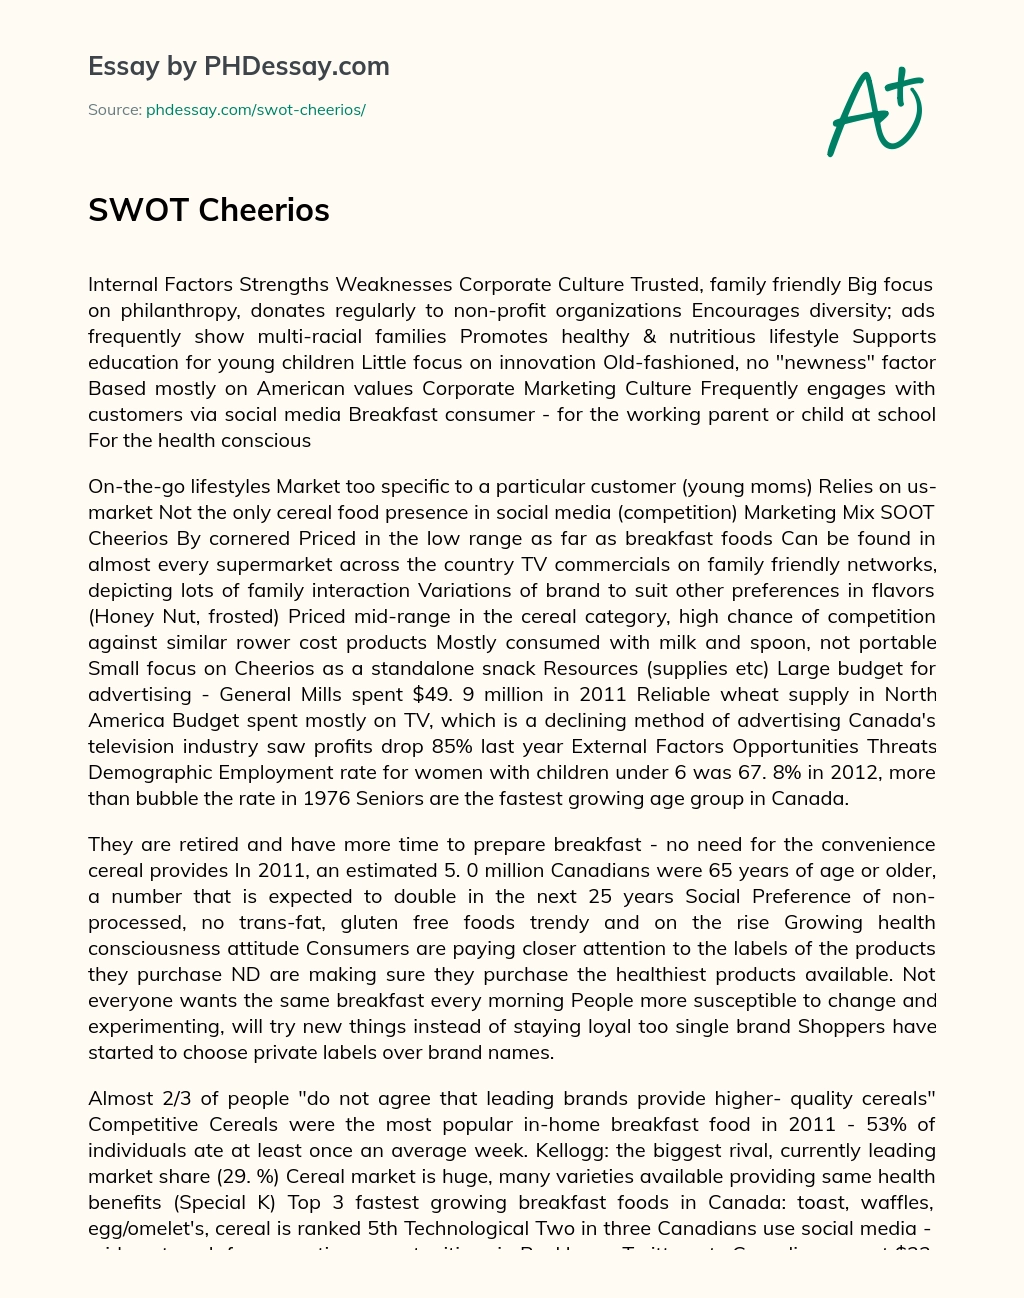 SWOT Cheerios essay